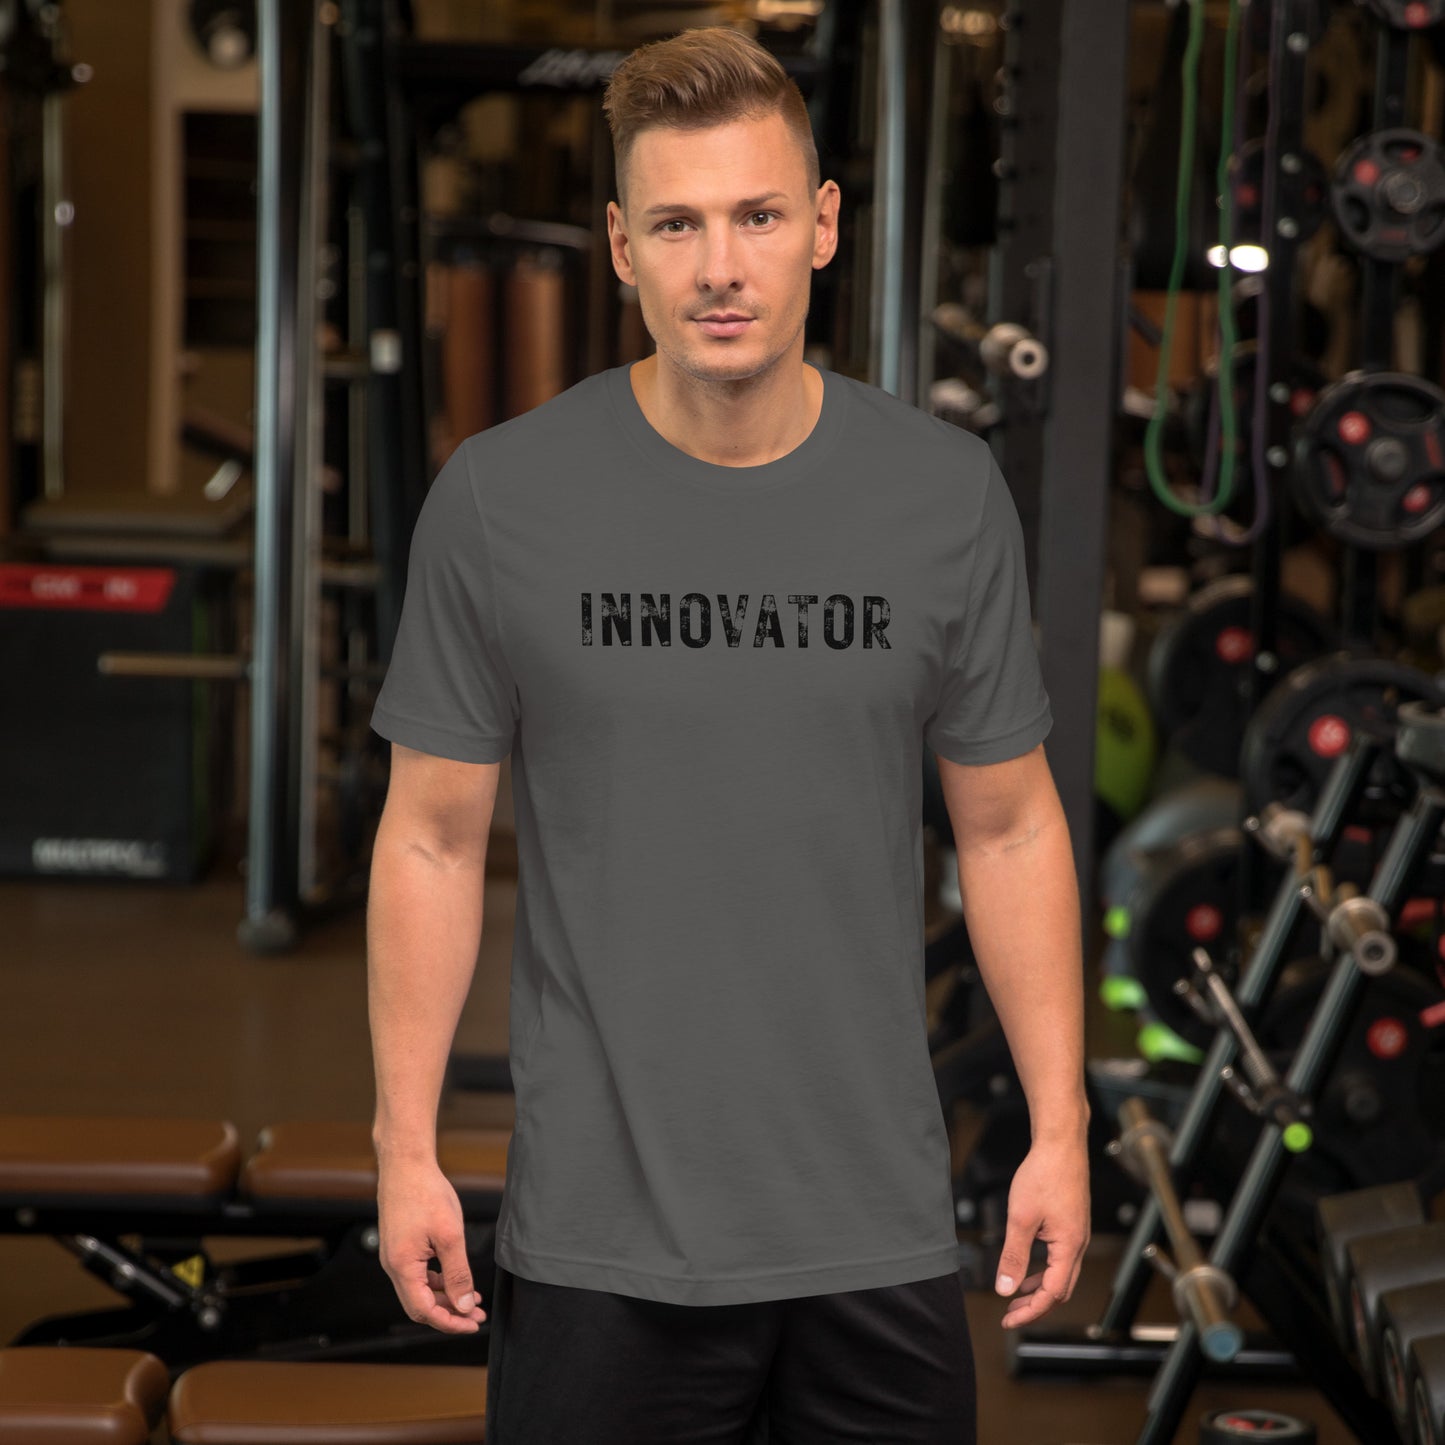 Innovator Unisex T-Shirt